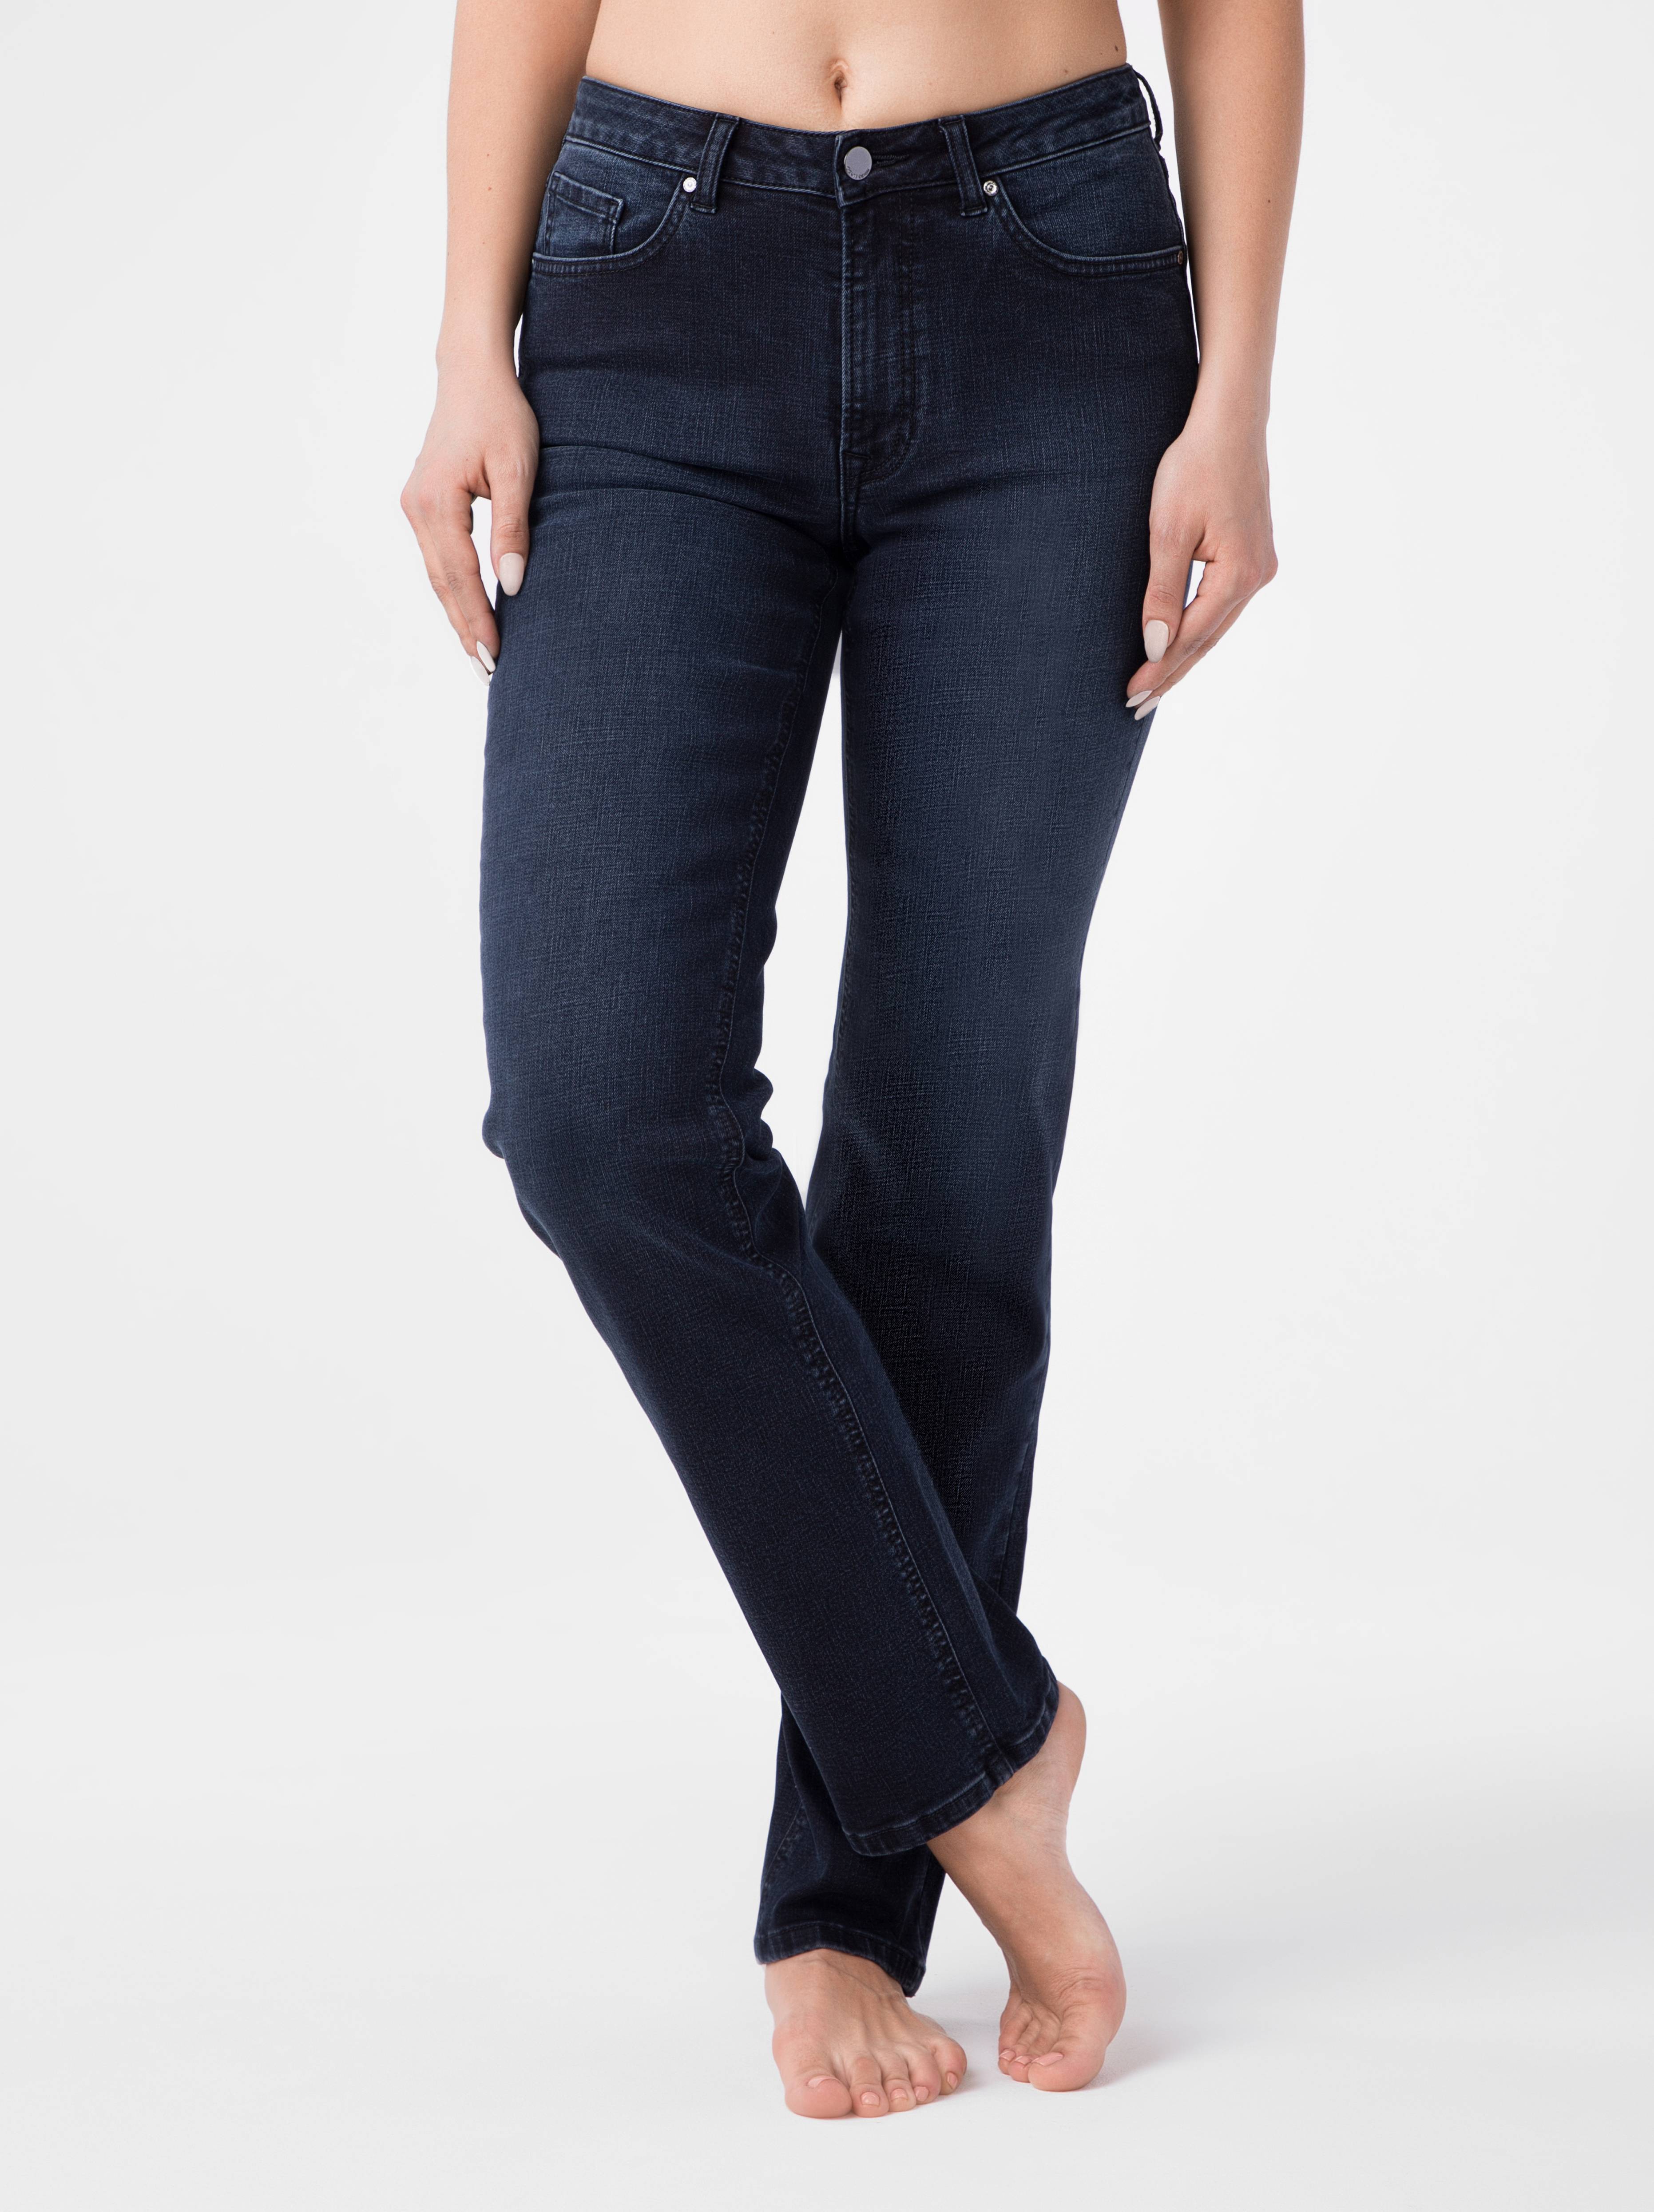 Ультраэластичные eco-friendly straight джинсы с высокой посадкой CON-156 Conte ⭐️, цвет blue-black, размер 164-102 - фото 1